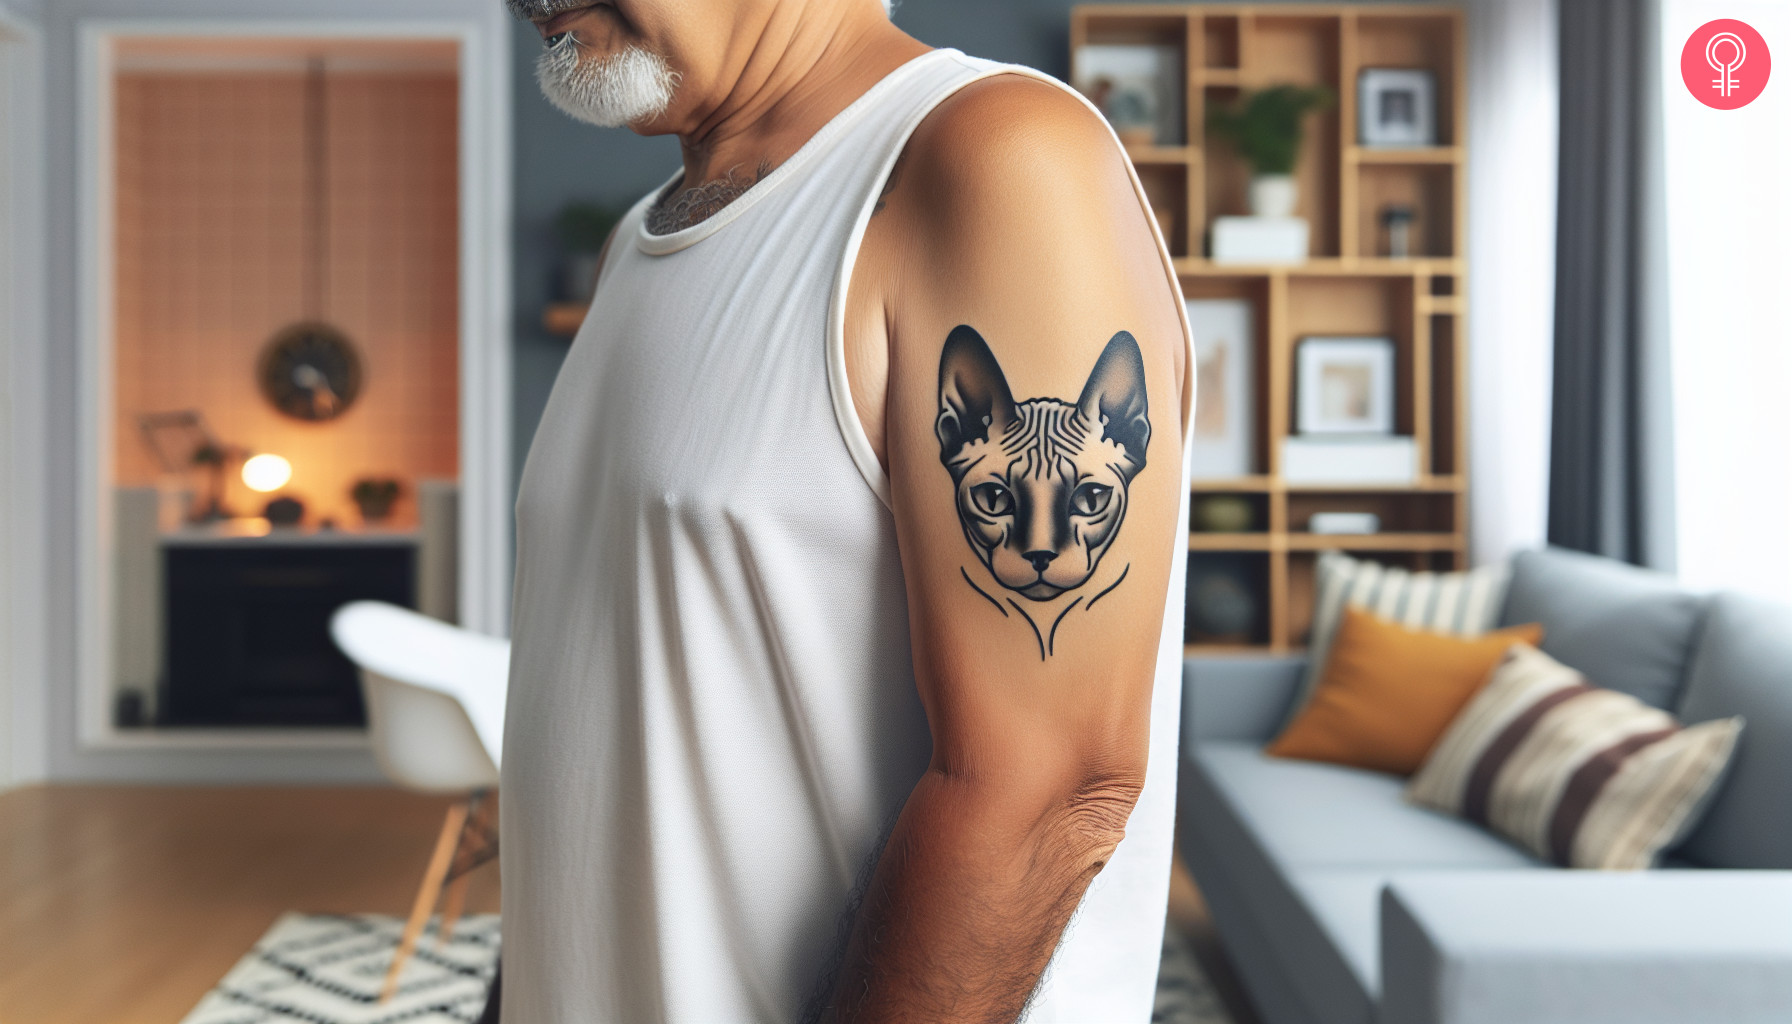 Sphynx cat head tattoo on the upper arm